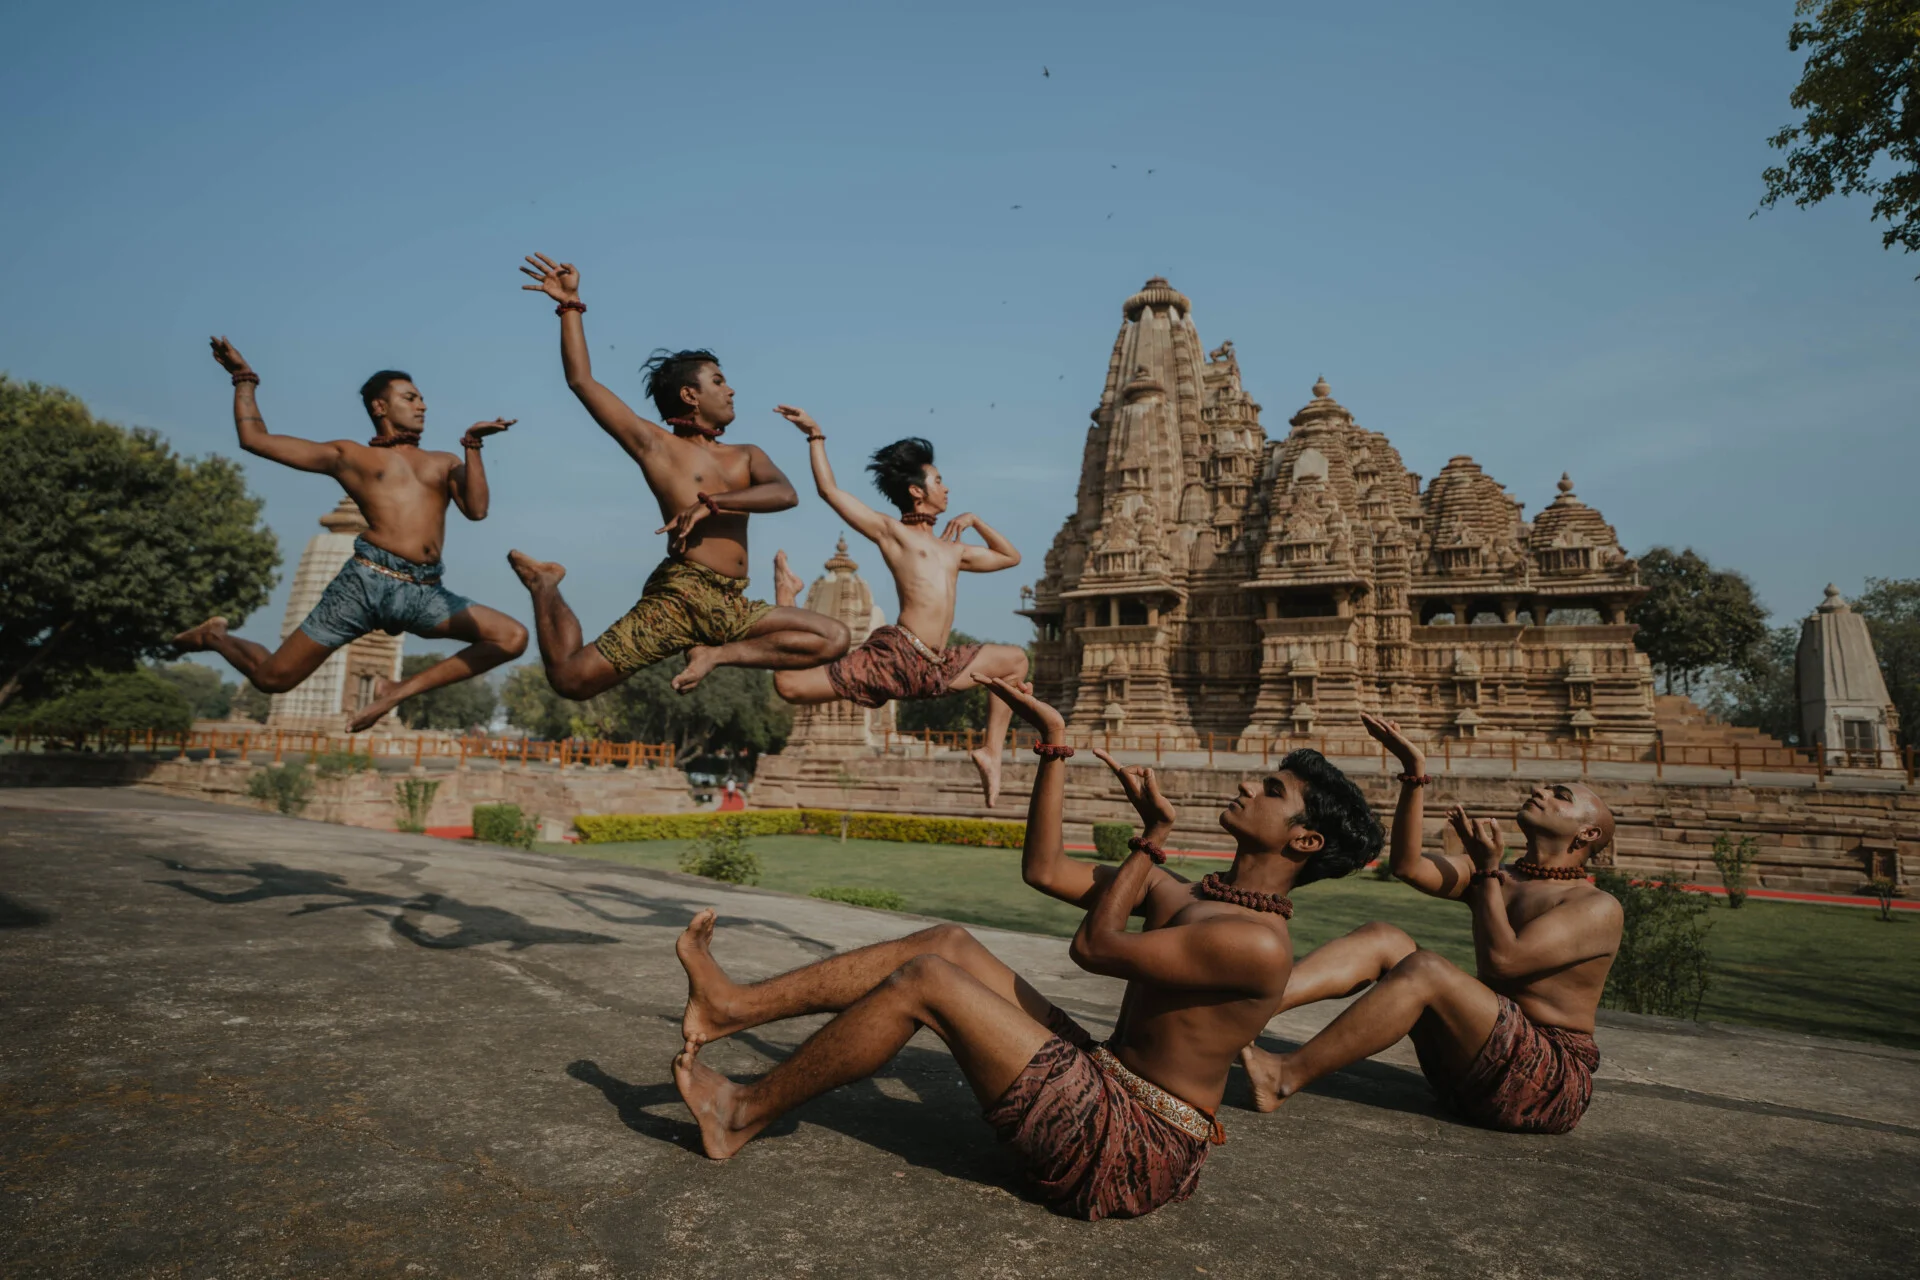 Sutra Dancers at the Khajuraho temples